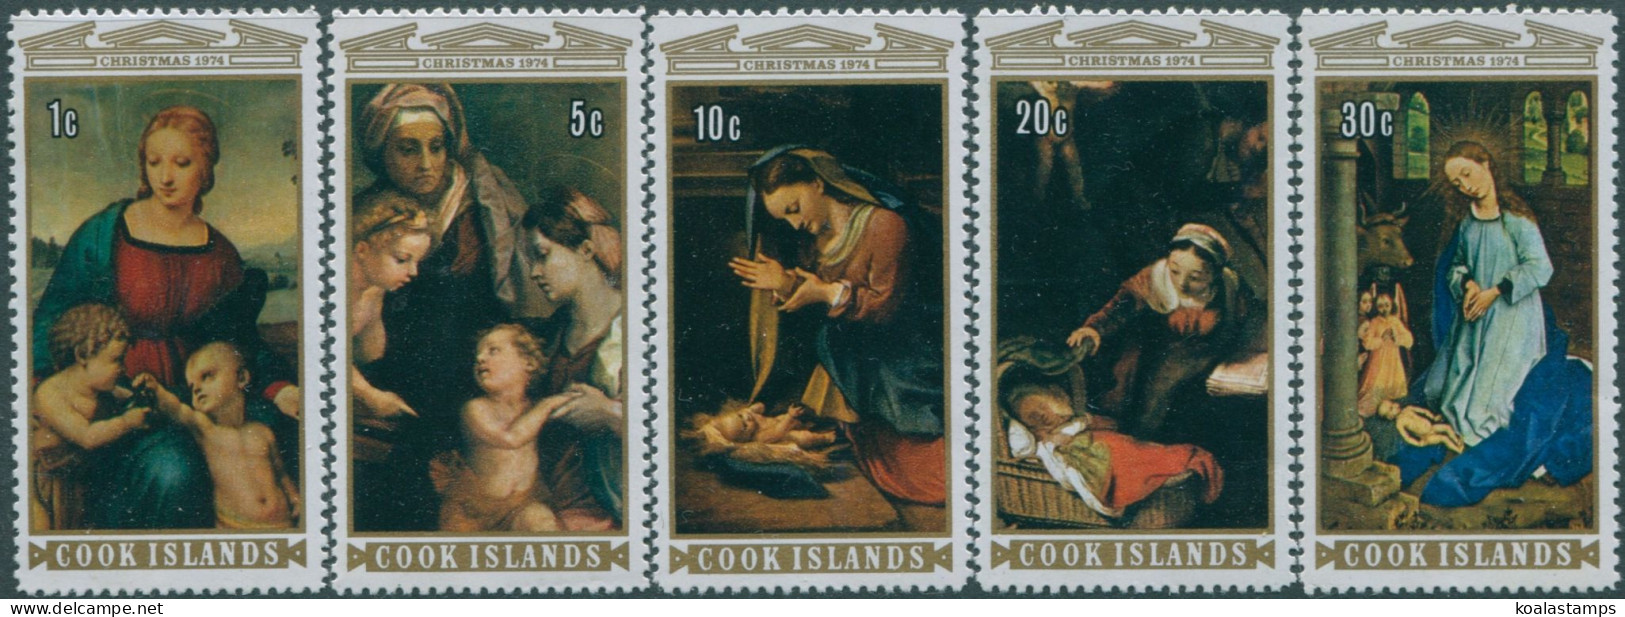 Cook Islands 1974 SG500-504 Christmas Set MNH - Cook Islands